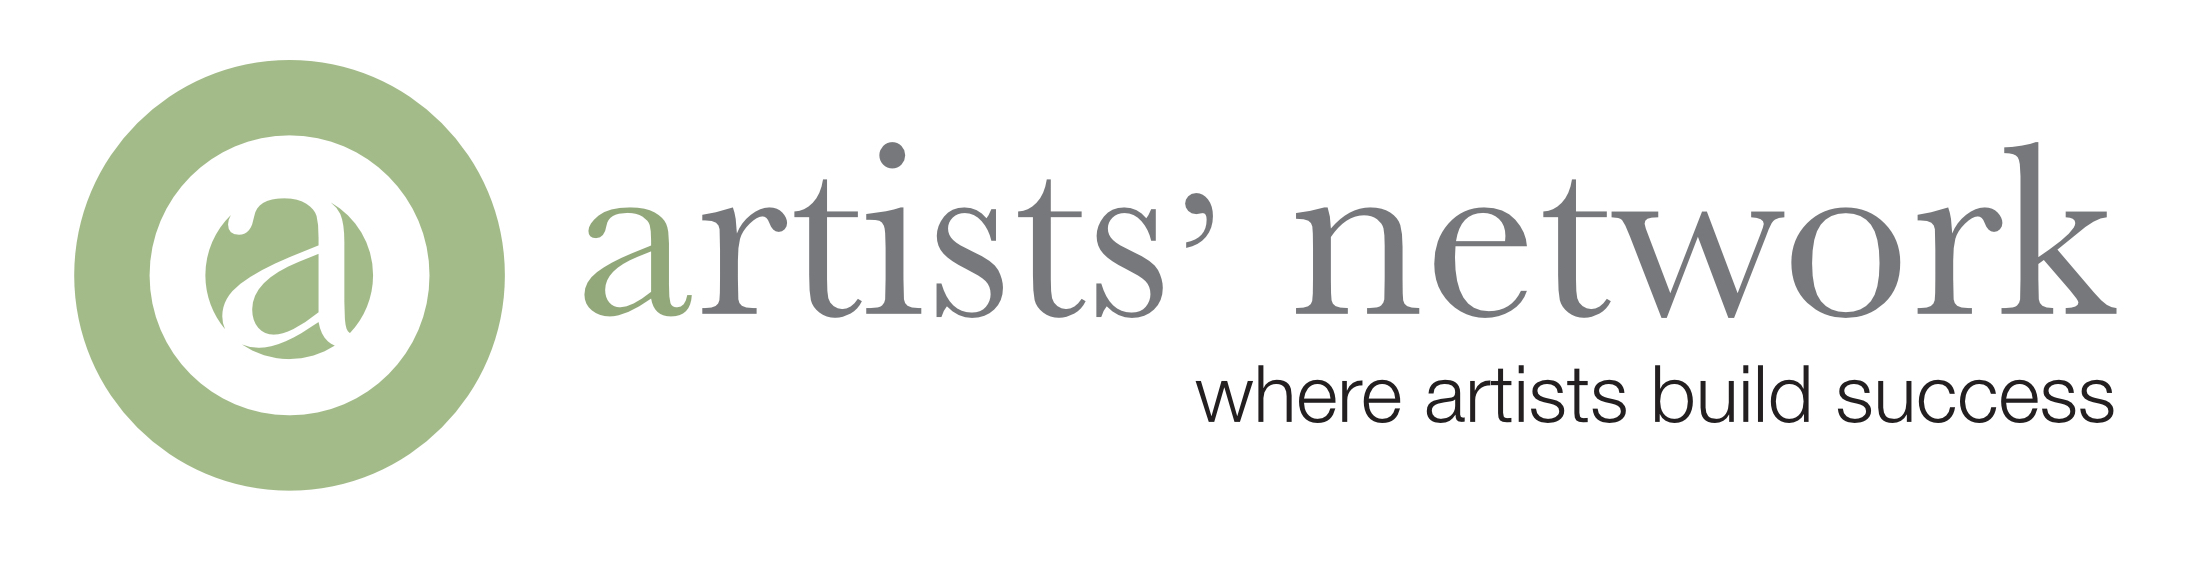 Artists' Network Membership